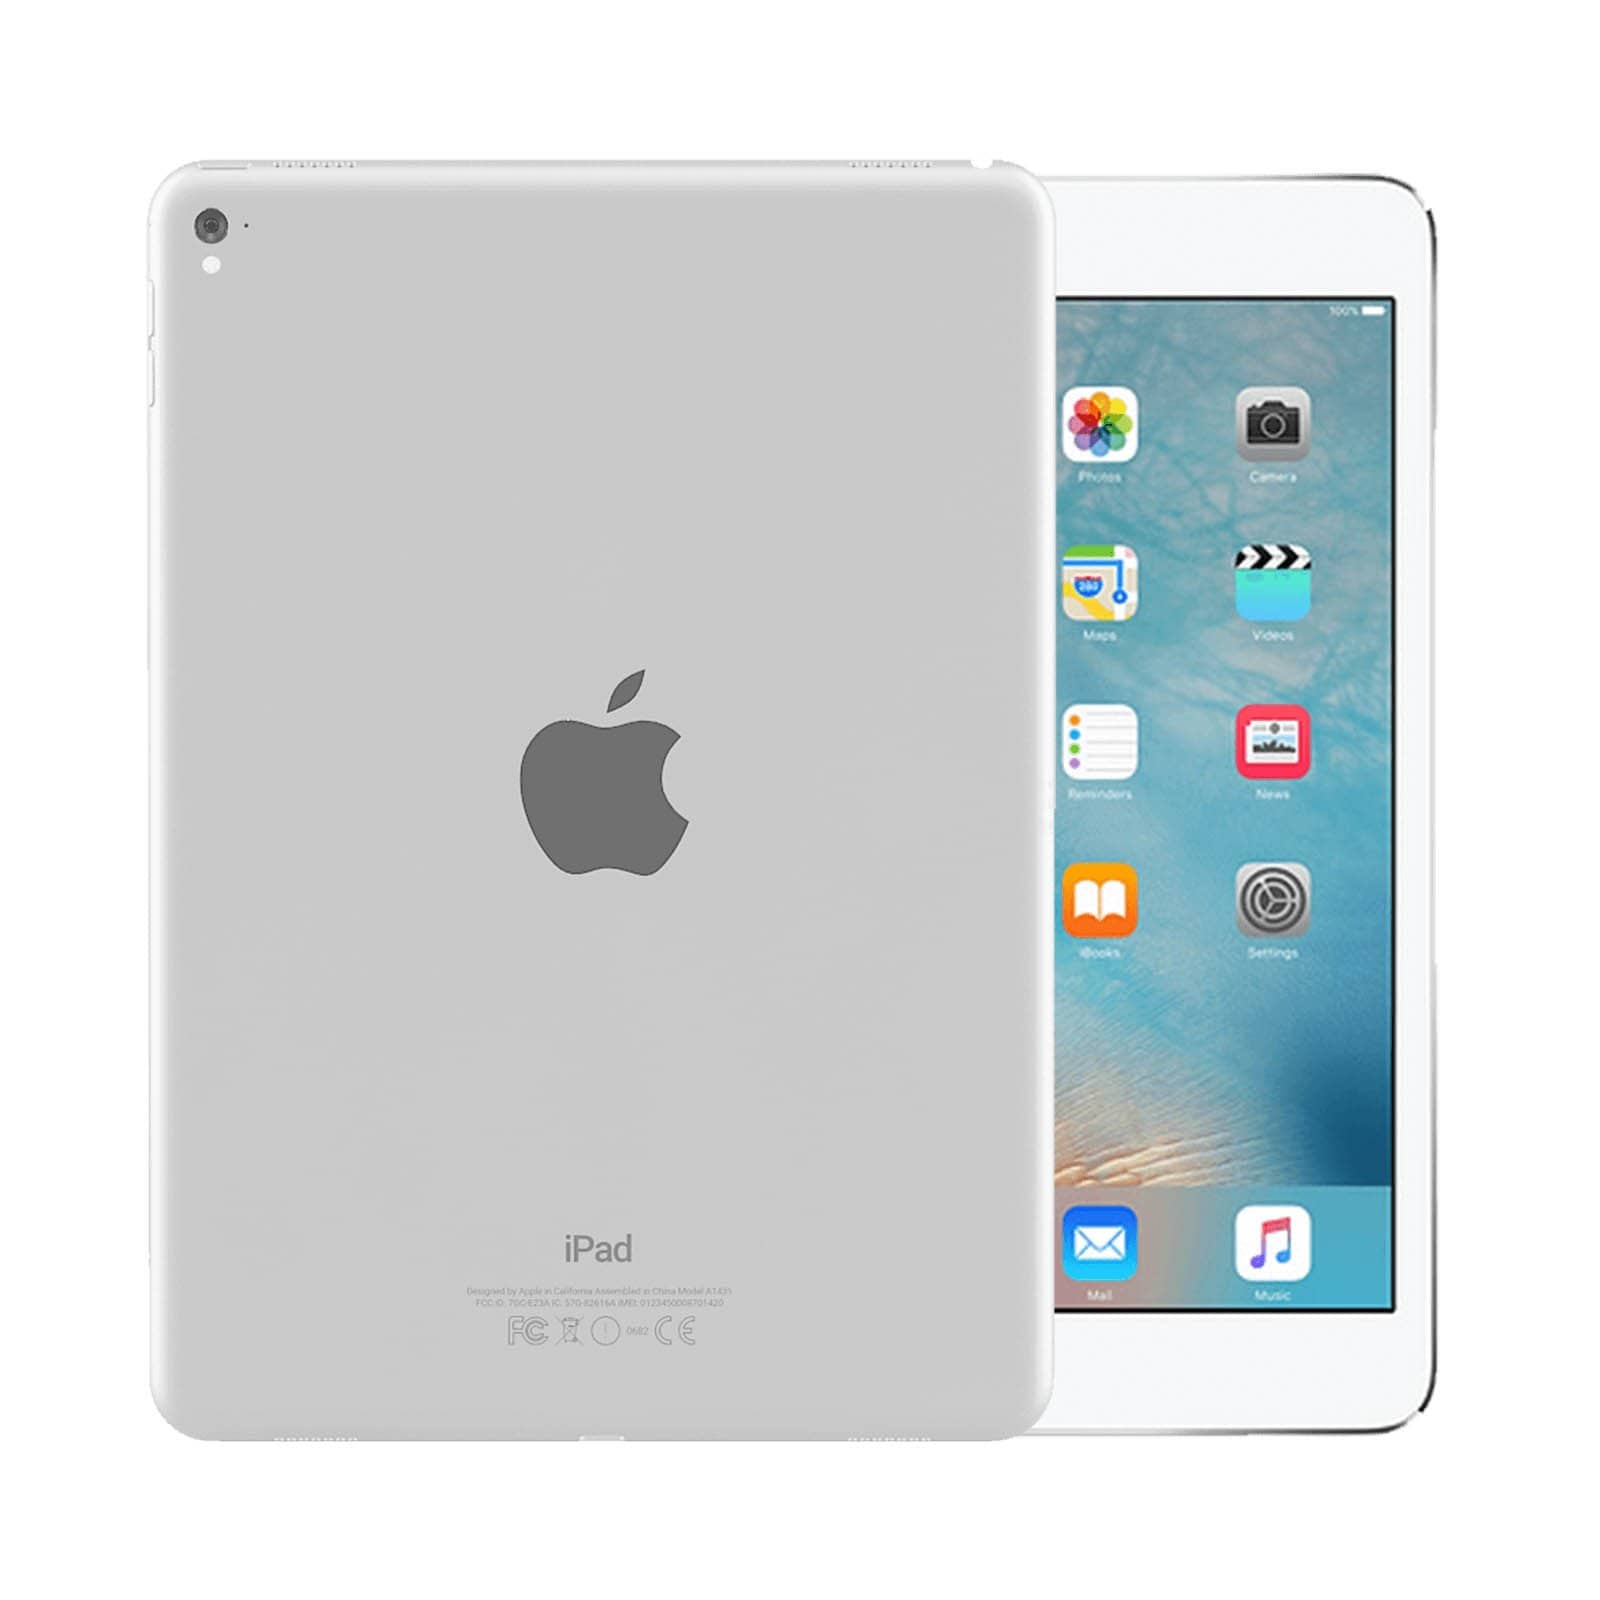 iPad Pro 9.7 Inch 32GB Silver Very Good - WiFi 32GB Silver Very Good